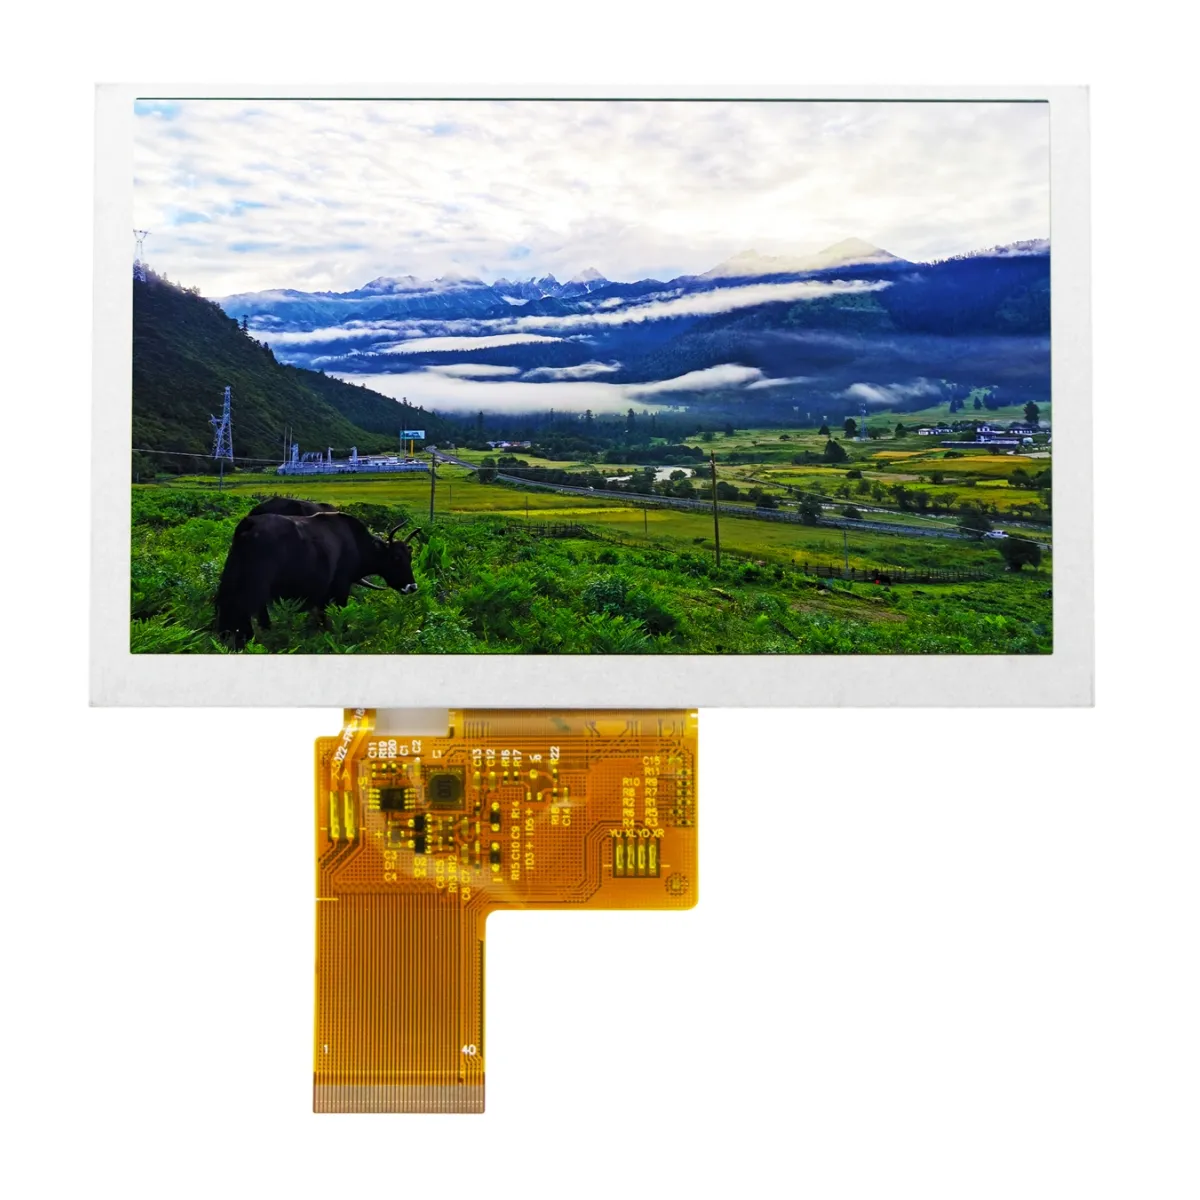 Industriale 5 pollici flessibile led 16.7M 800*480 TN 40 pin 24 bit-RGB tft lcd touch screen per pubblicità